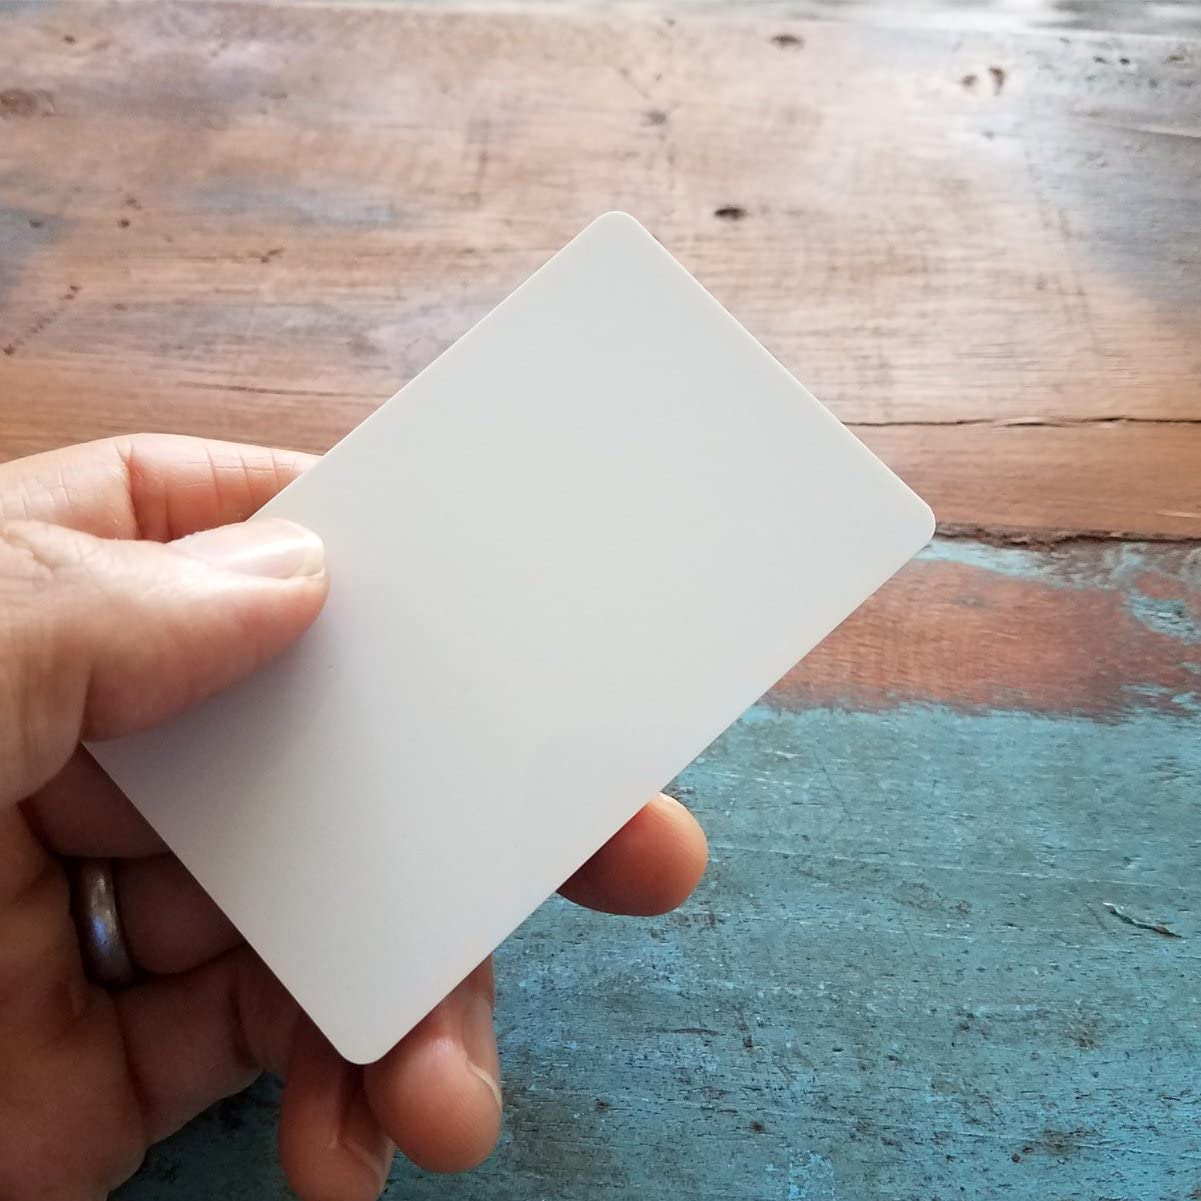 Blank PVC Cards - CR80/30 Composite Cards